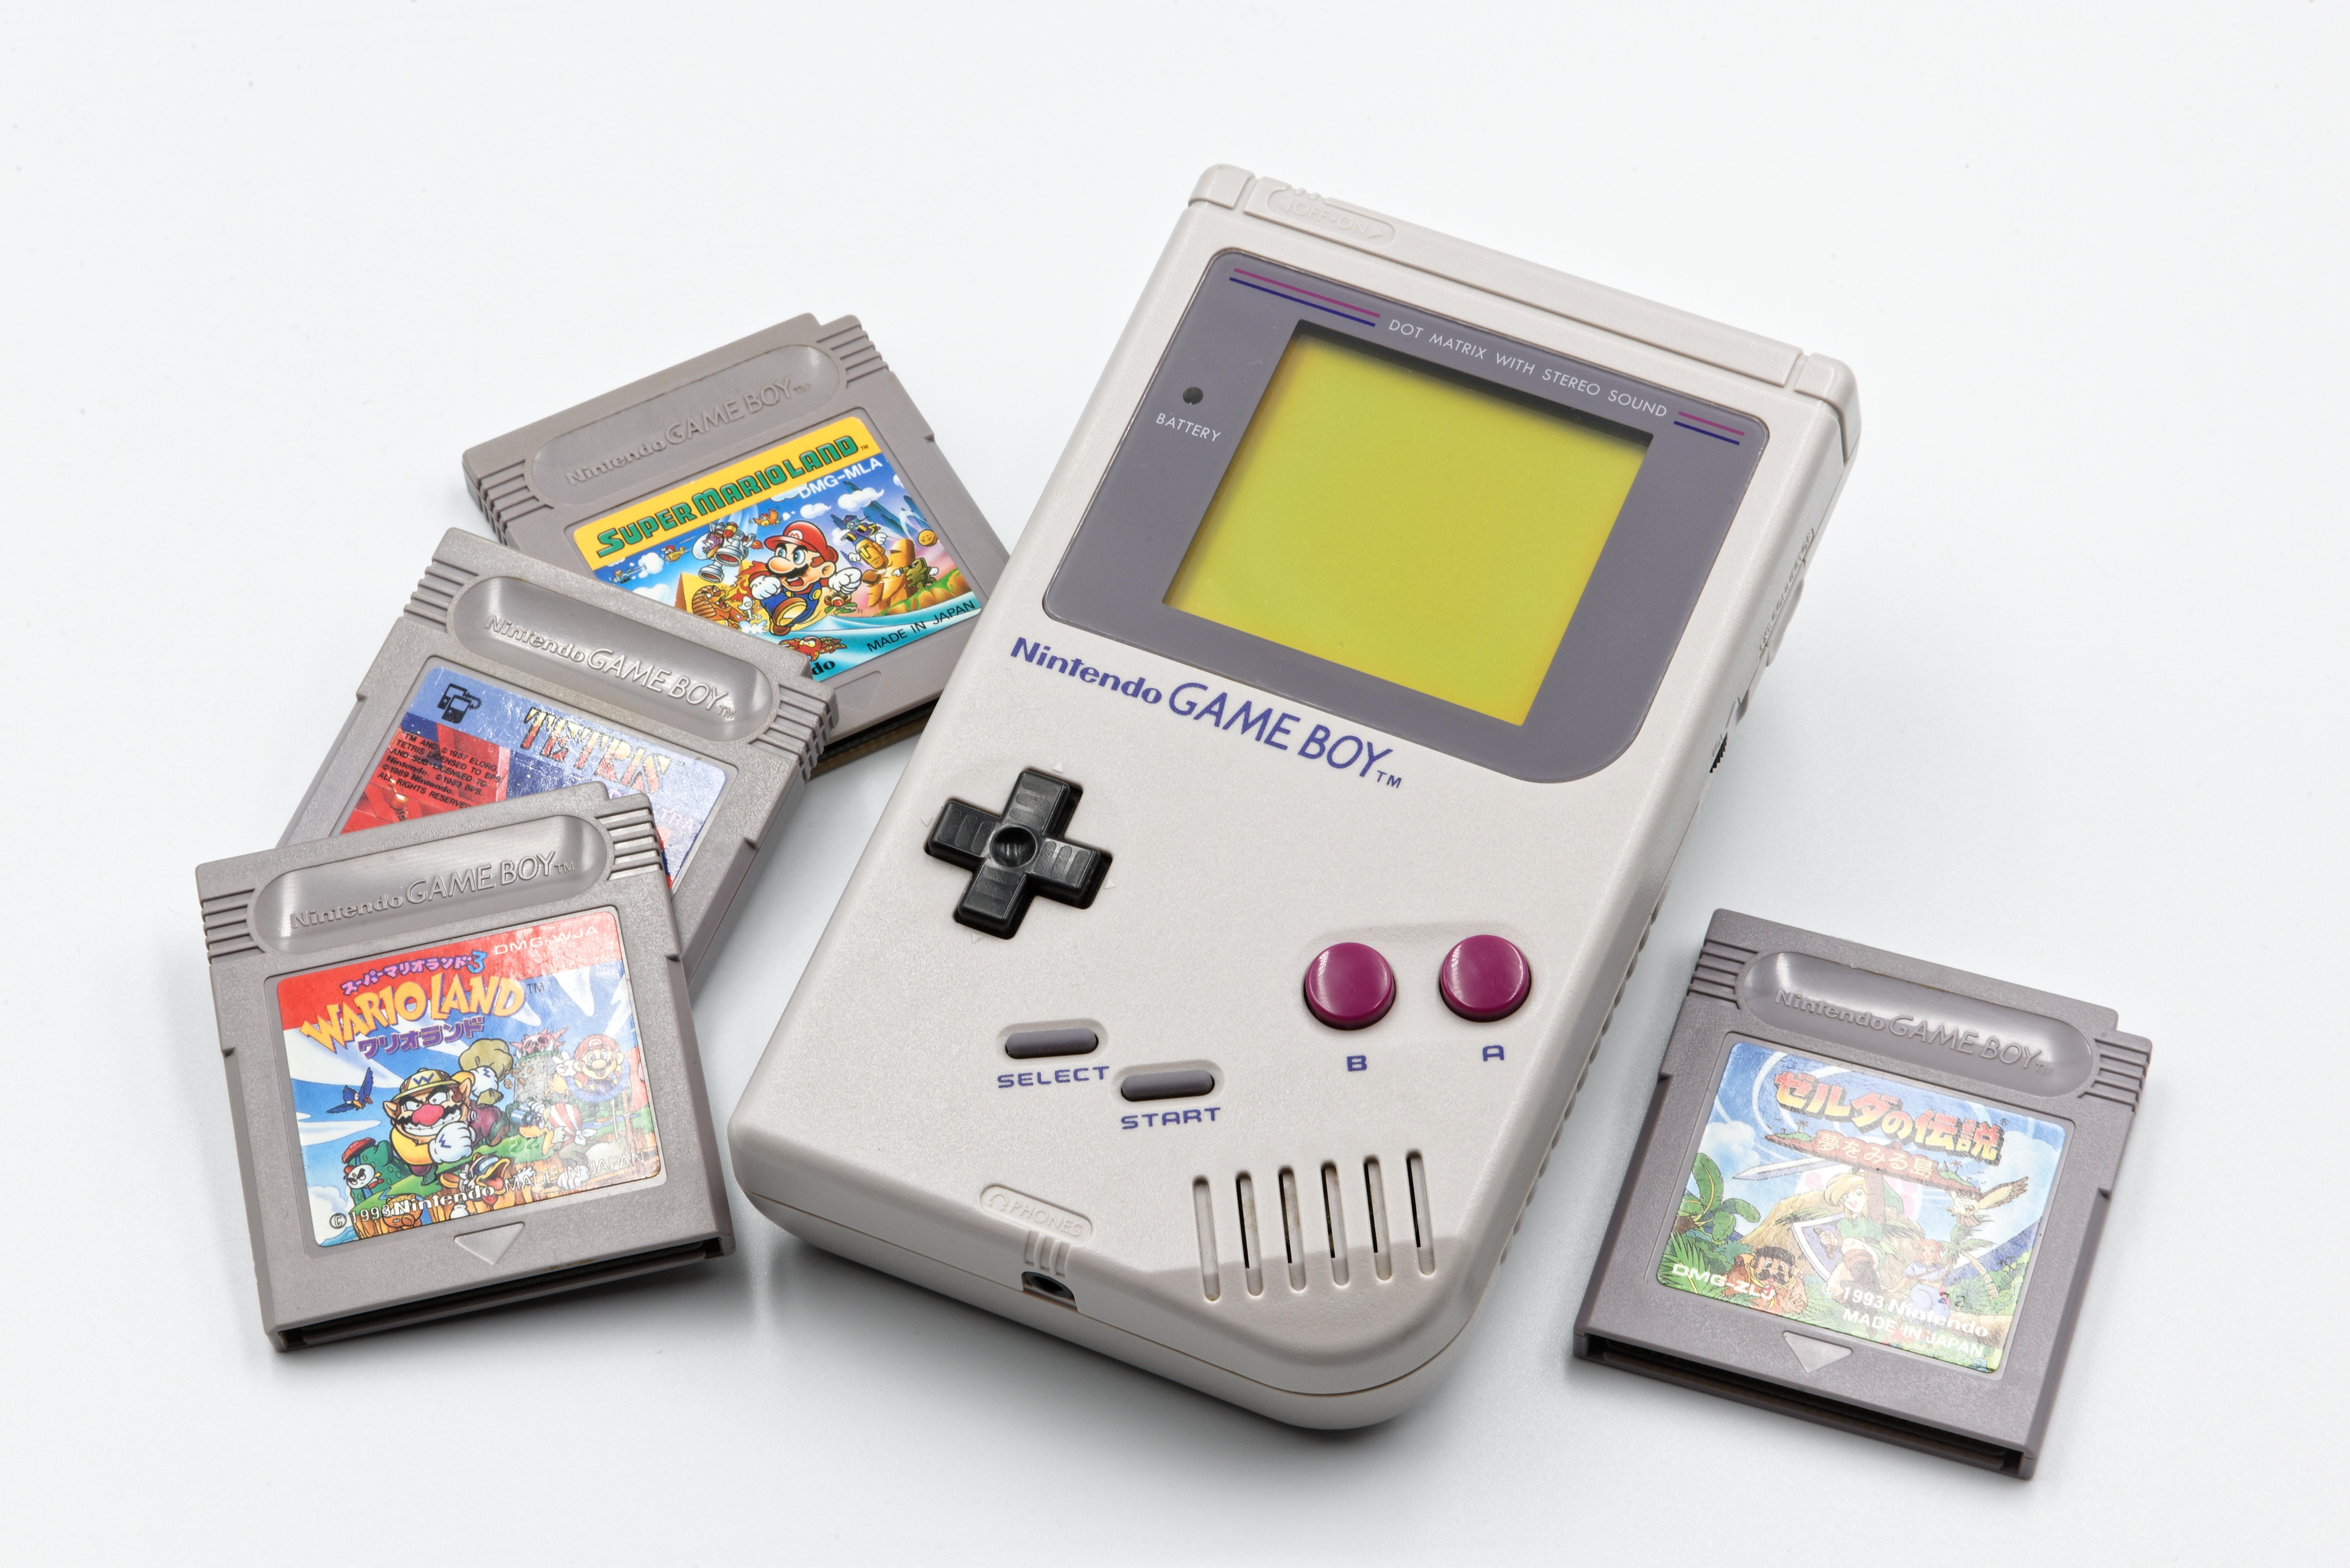 Nintendo Game Boy Original Gray Handheld Console w/ Box Basic Set